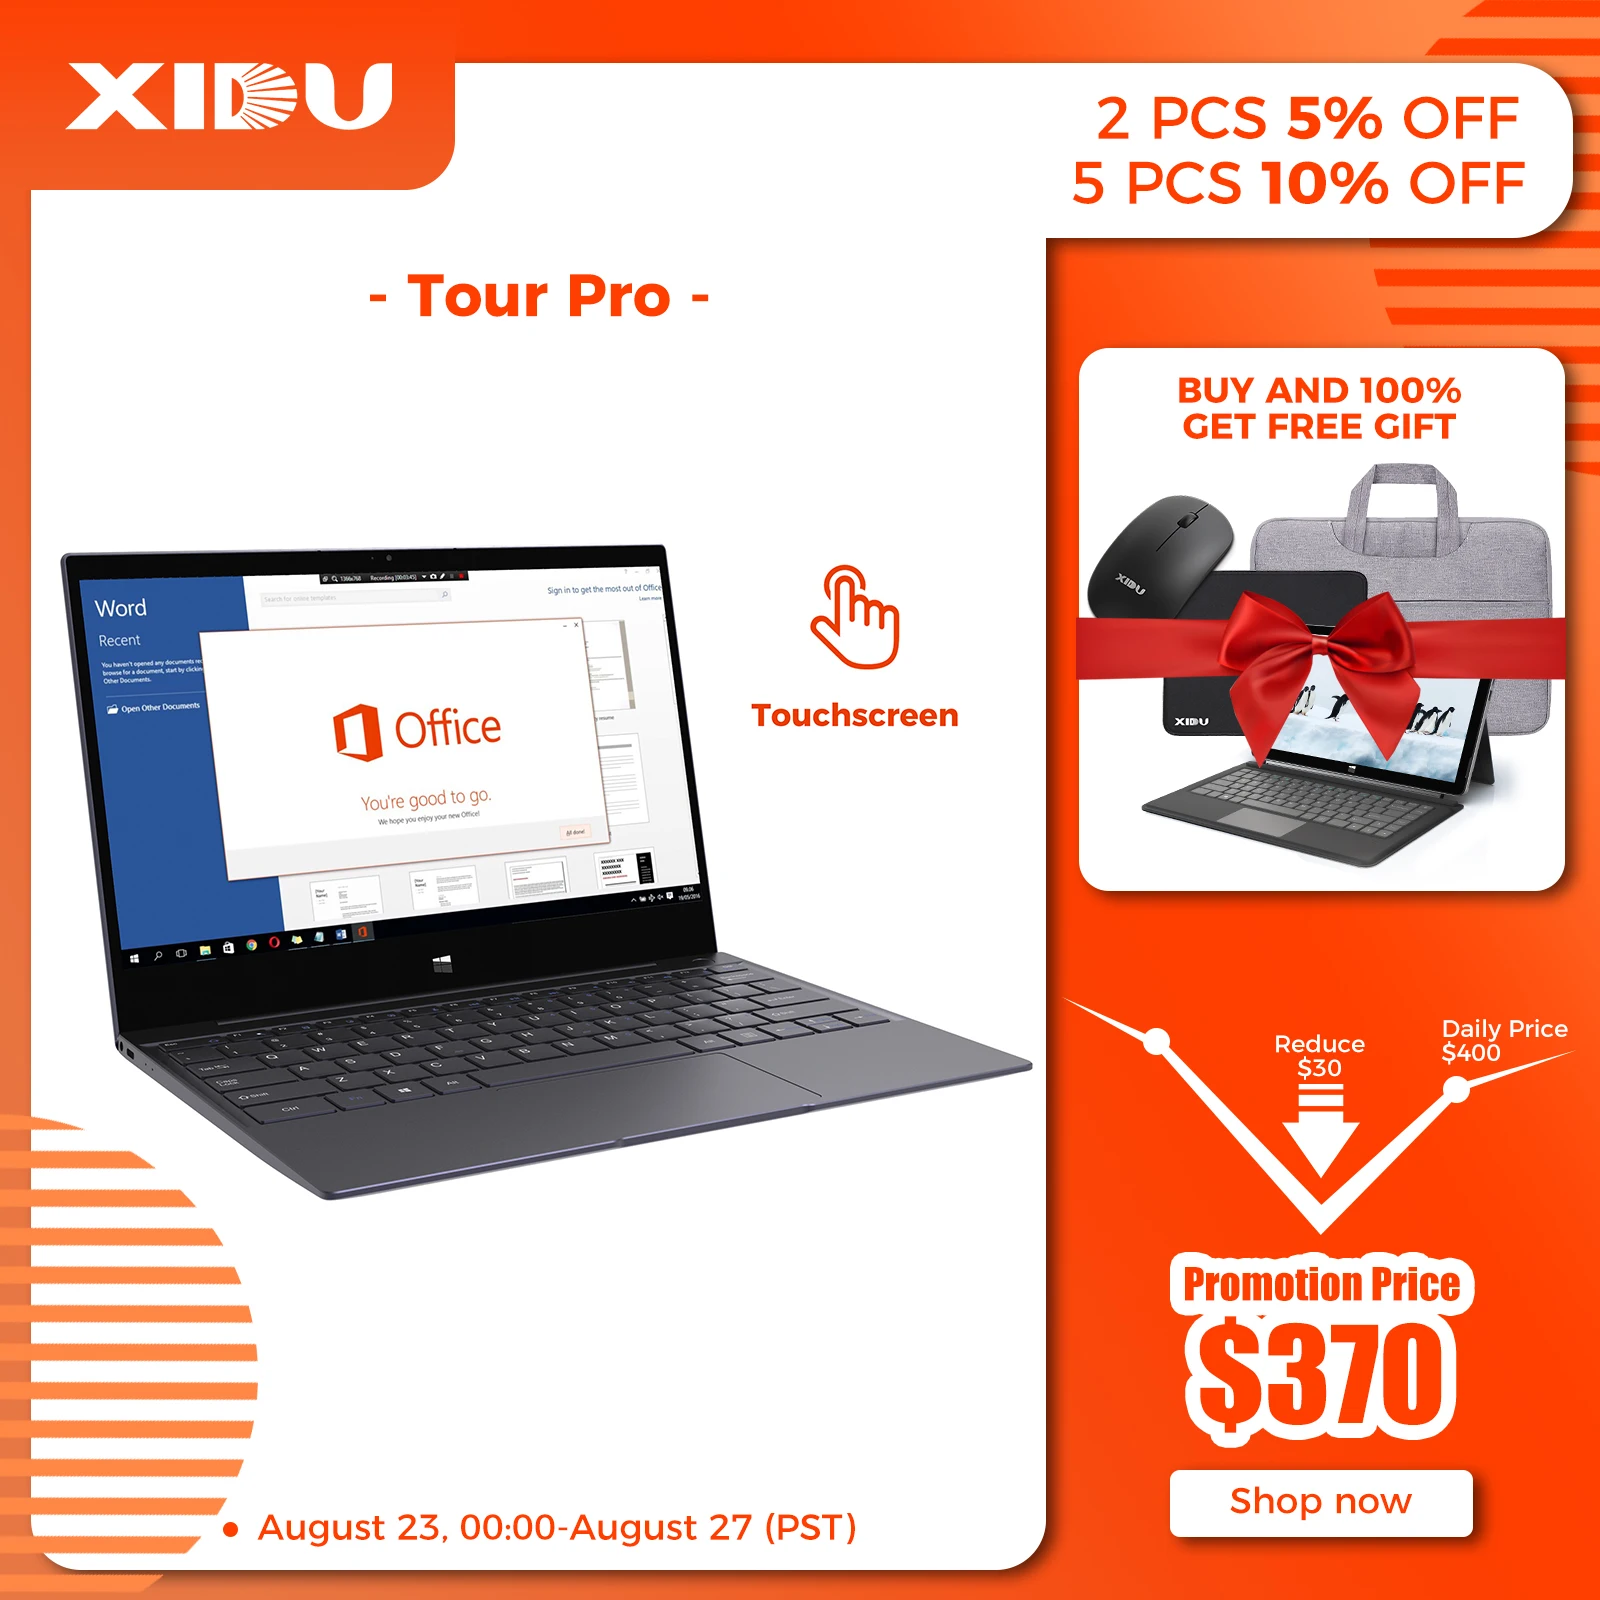 XIDU Laptop Window 10 OS Intel Processor 8GB RAM 128GB ROM SSD 2560X1440 Resolution Notebook For Business Touchscreen PC Tablet